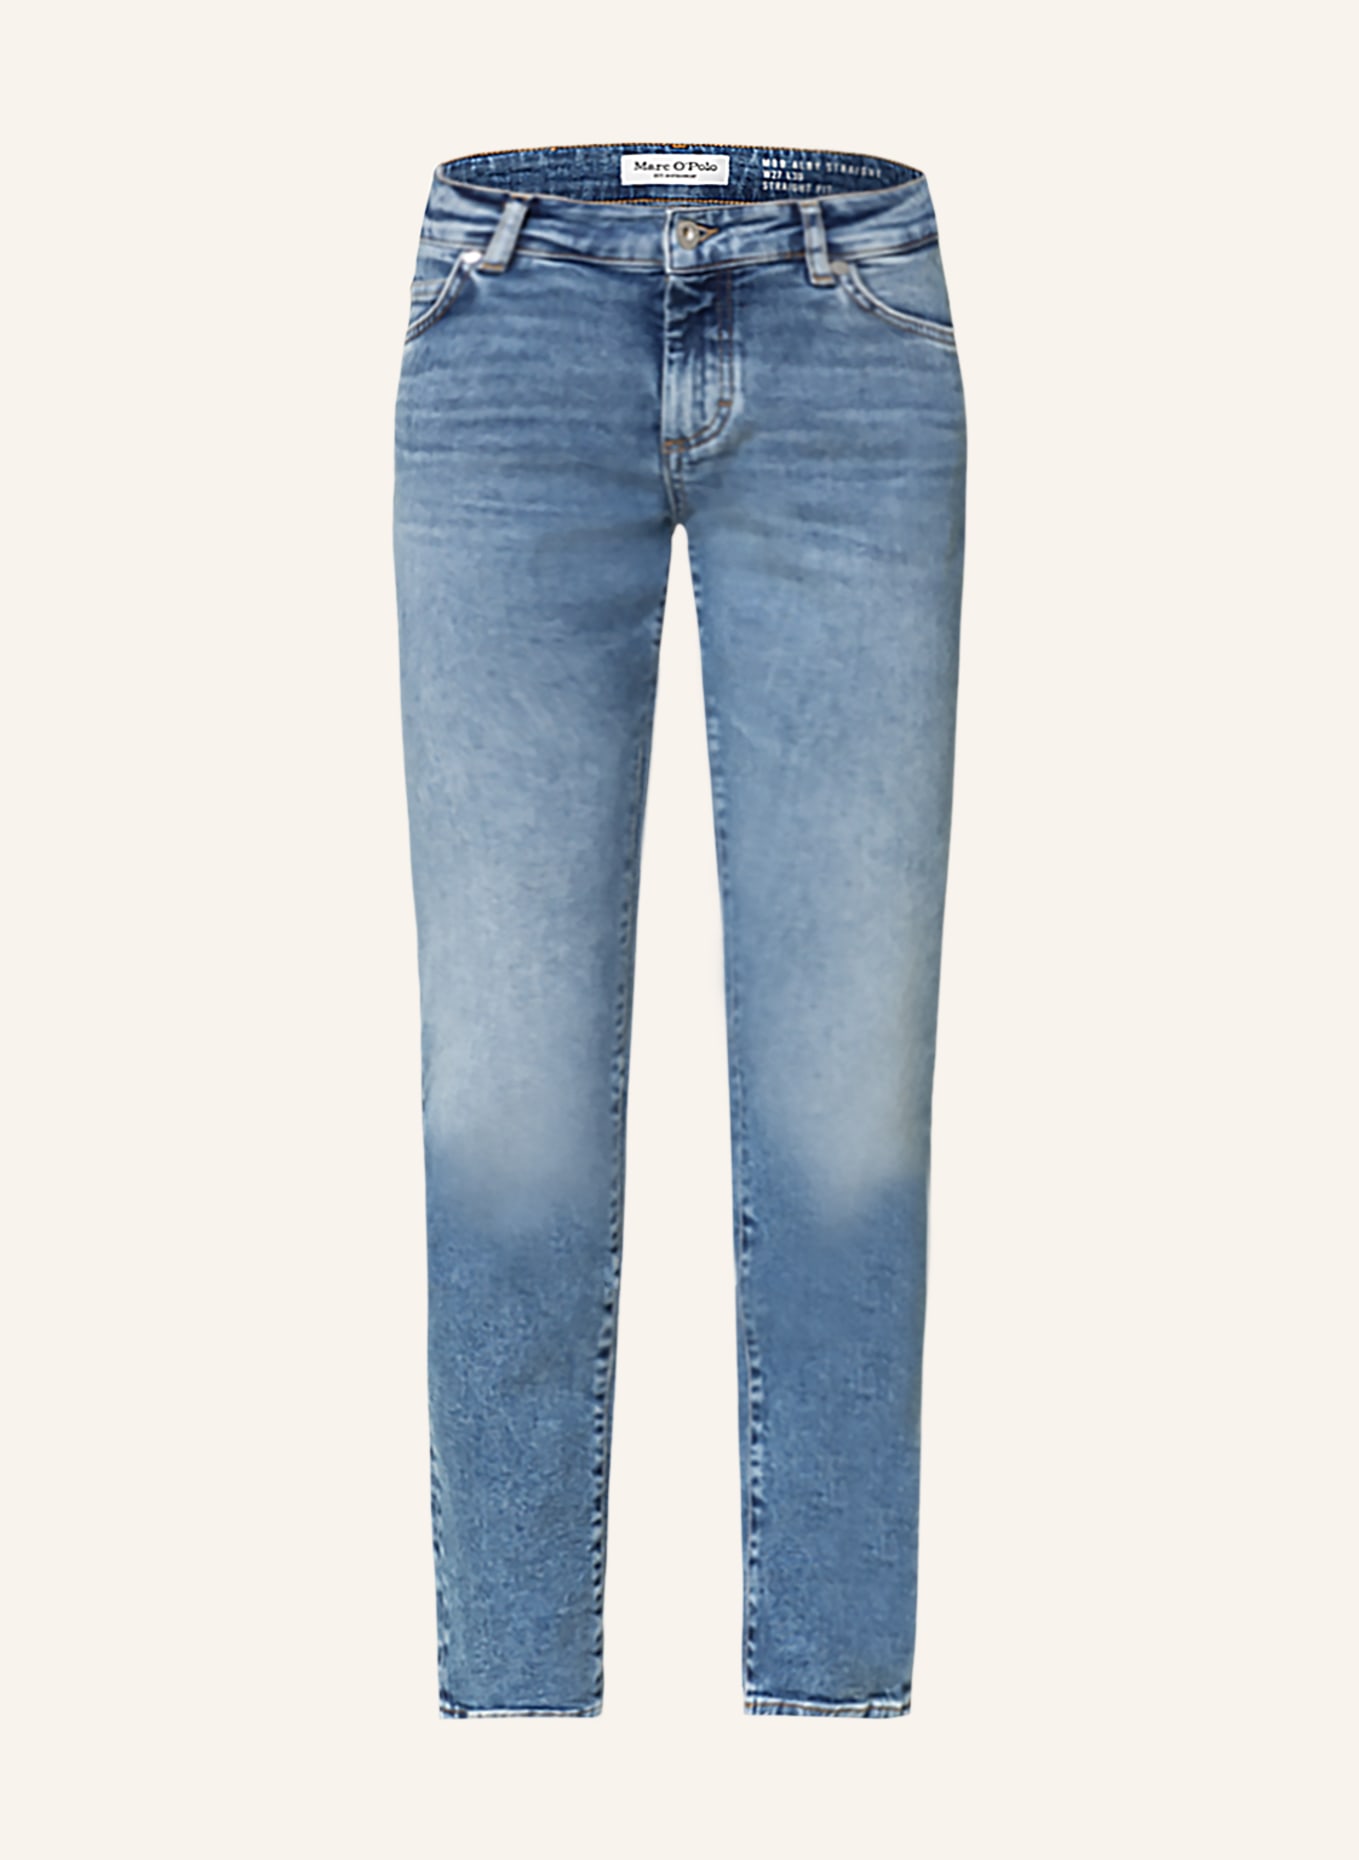 Marc O'Polo Straight Jeans, Farbe: 028 Mid blue stone wash (Bild 1)